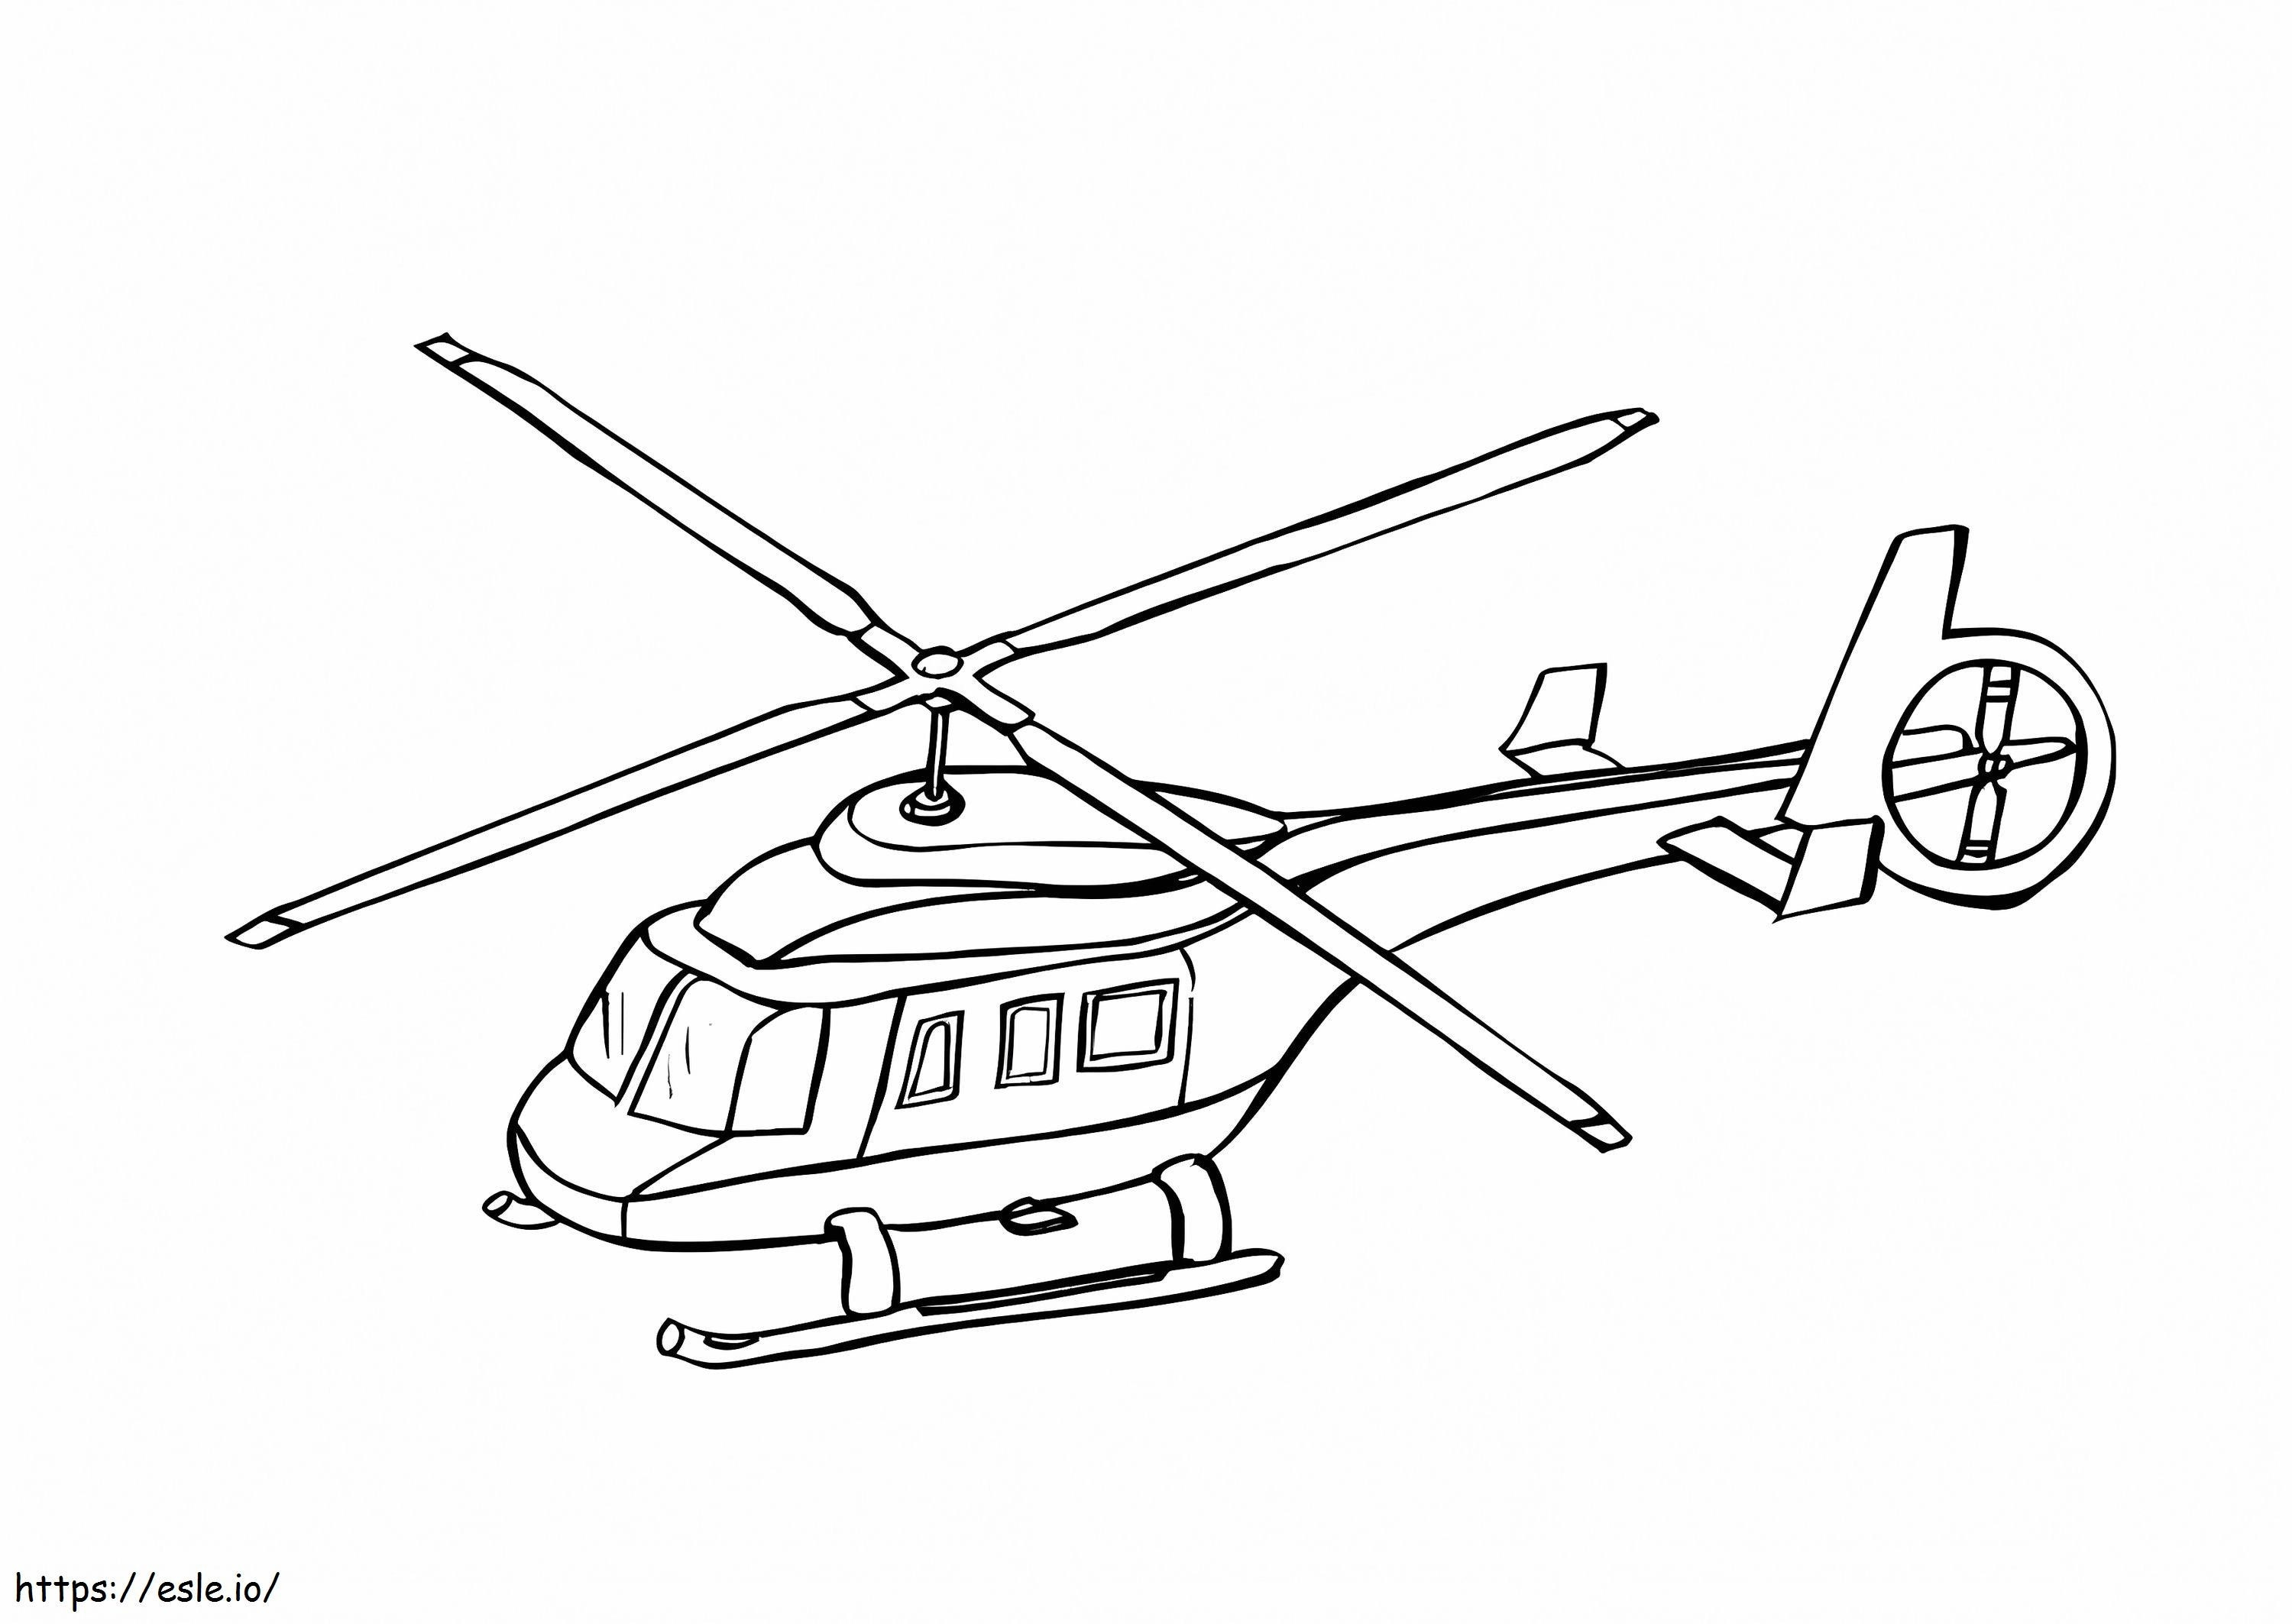 Elicopterul 5 de colorat